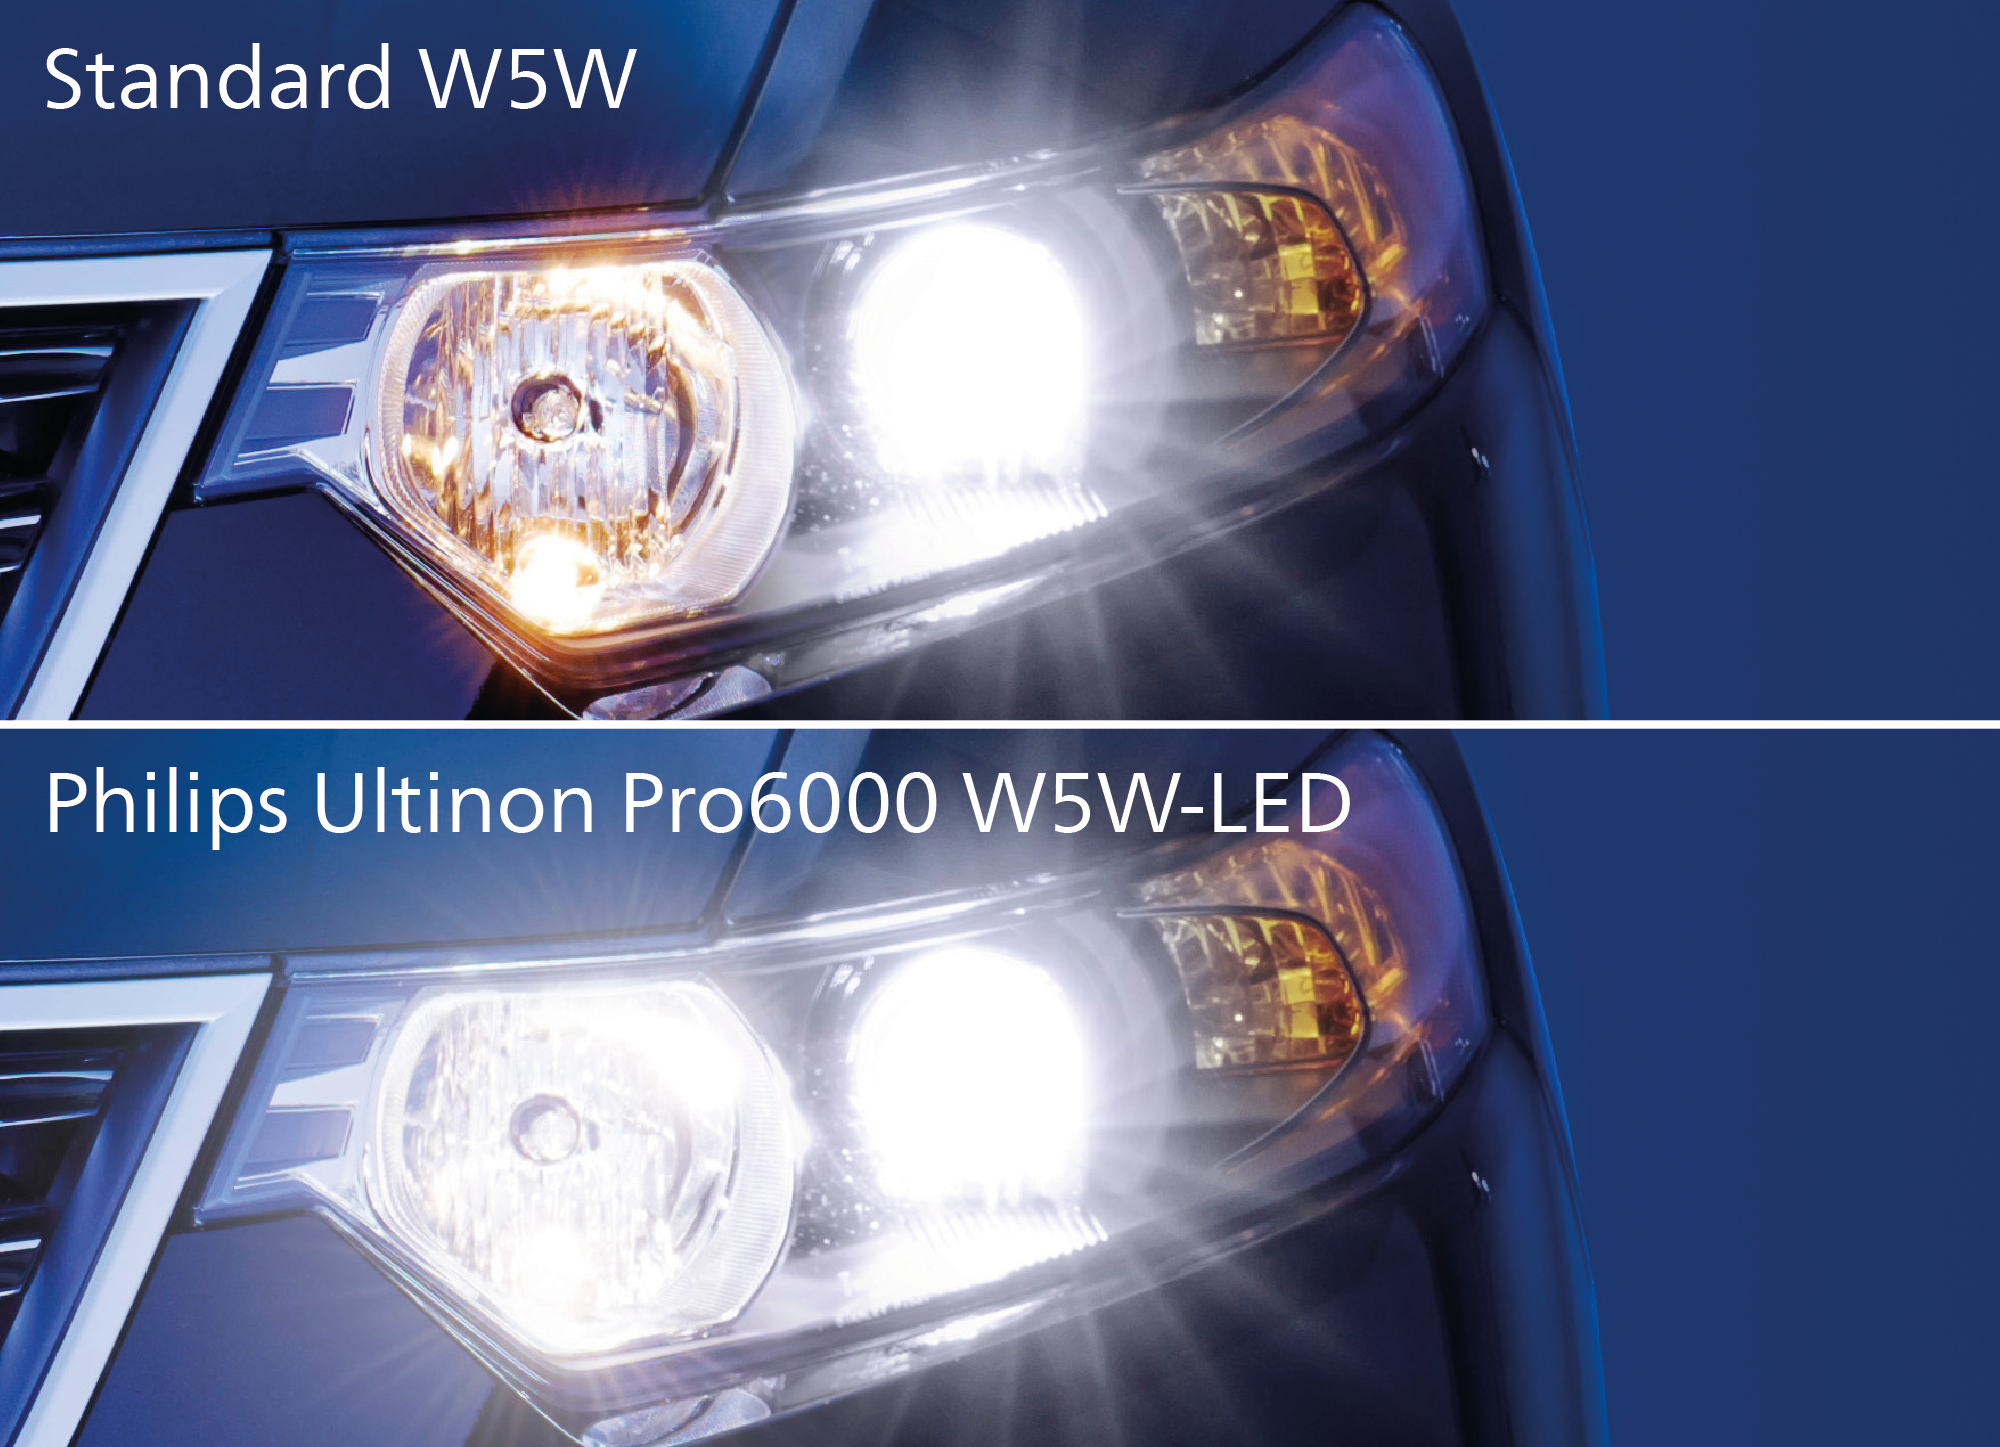 Philips Ultinon Pro6000 LED - Jetzt erstmals als W5W-LED